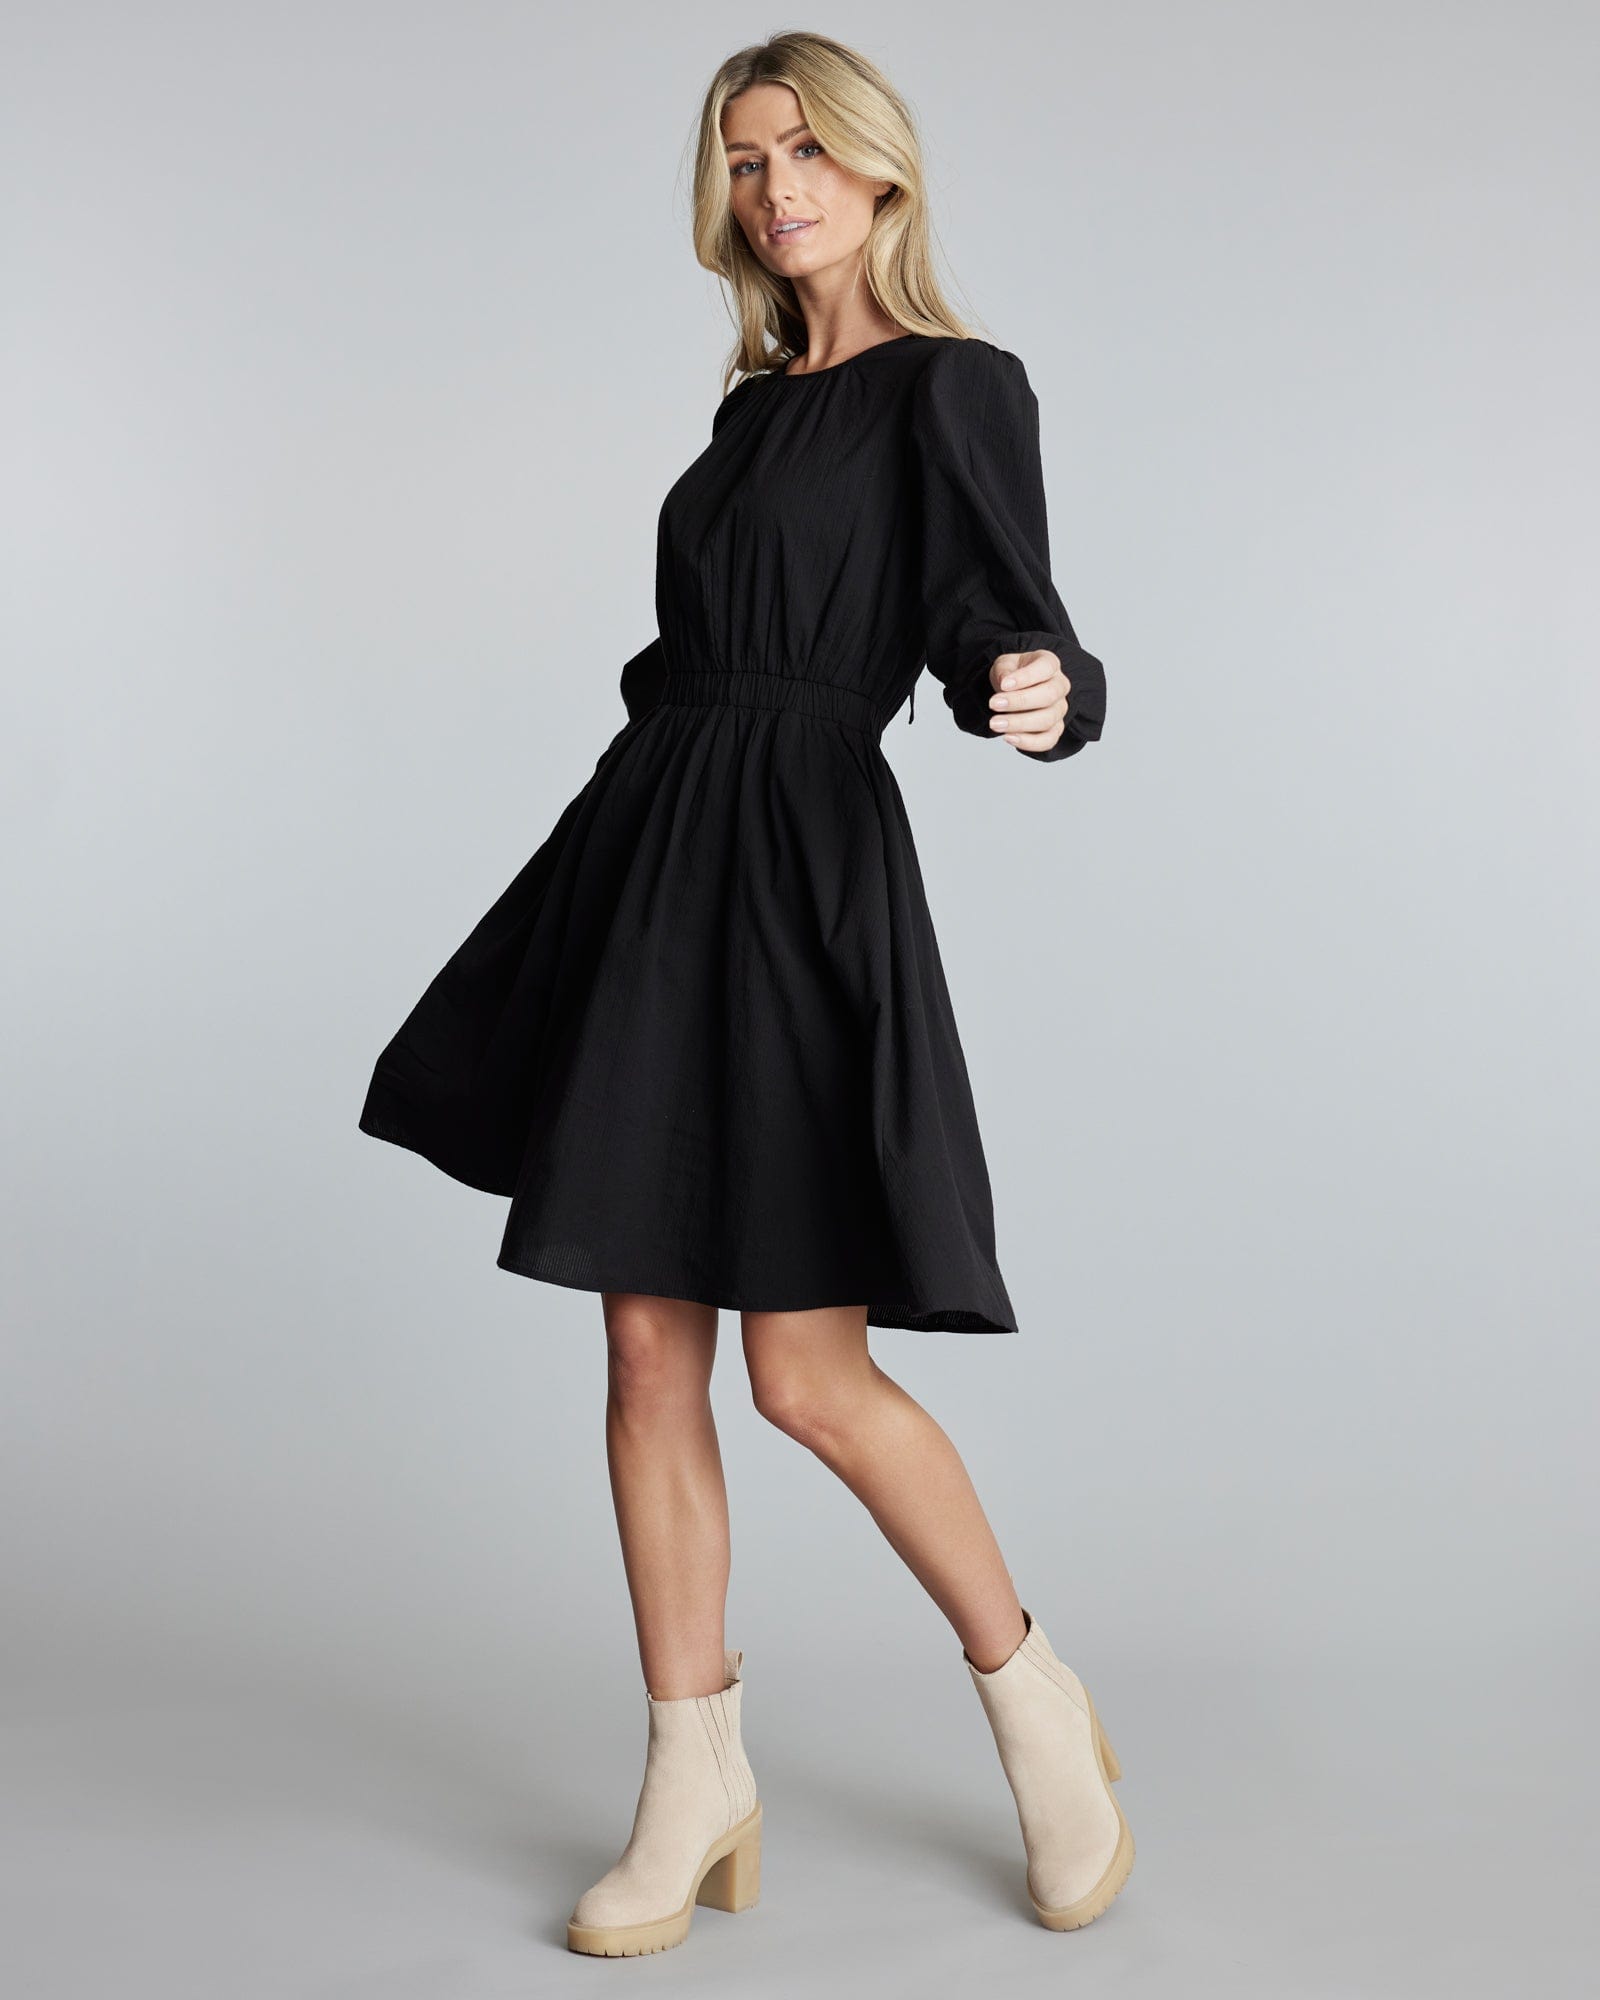 Woman in a black long sleeve, knee-length dress.